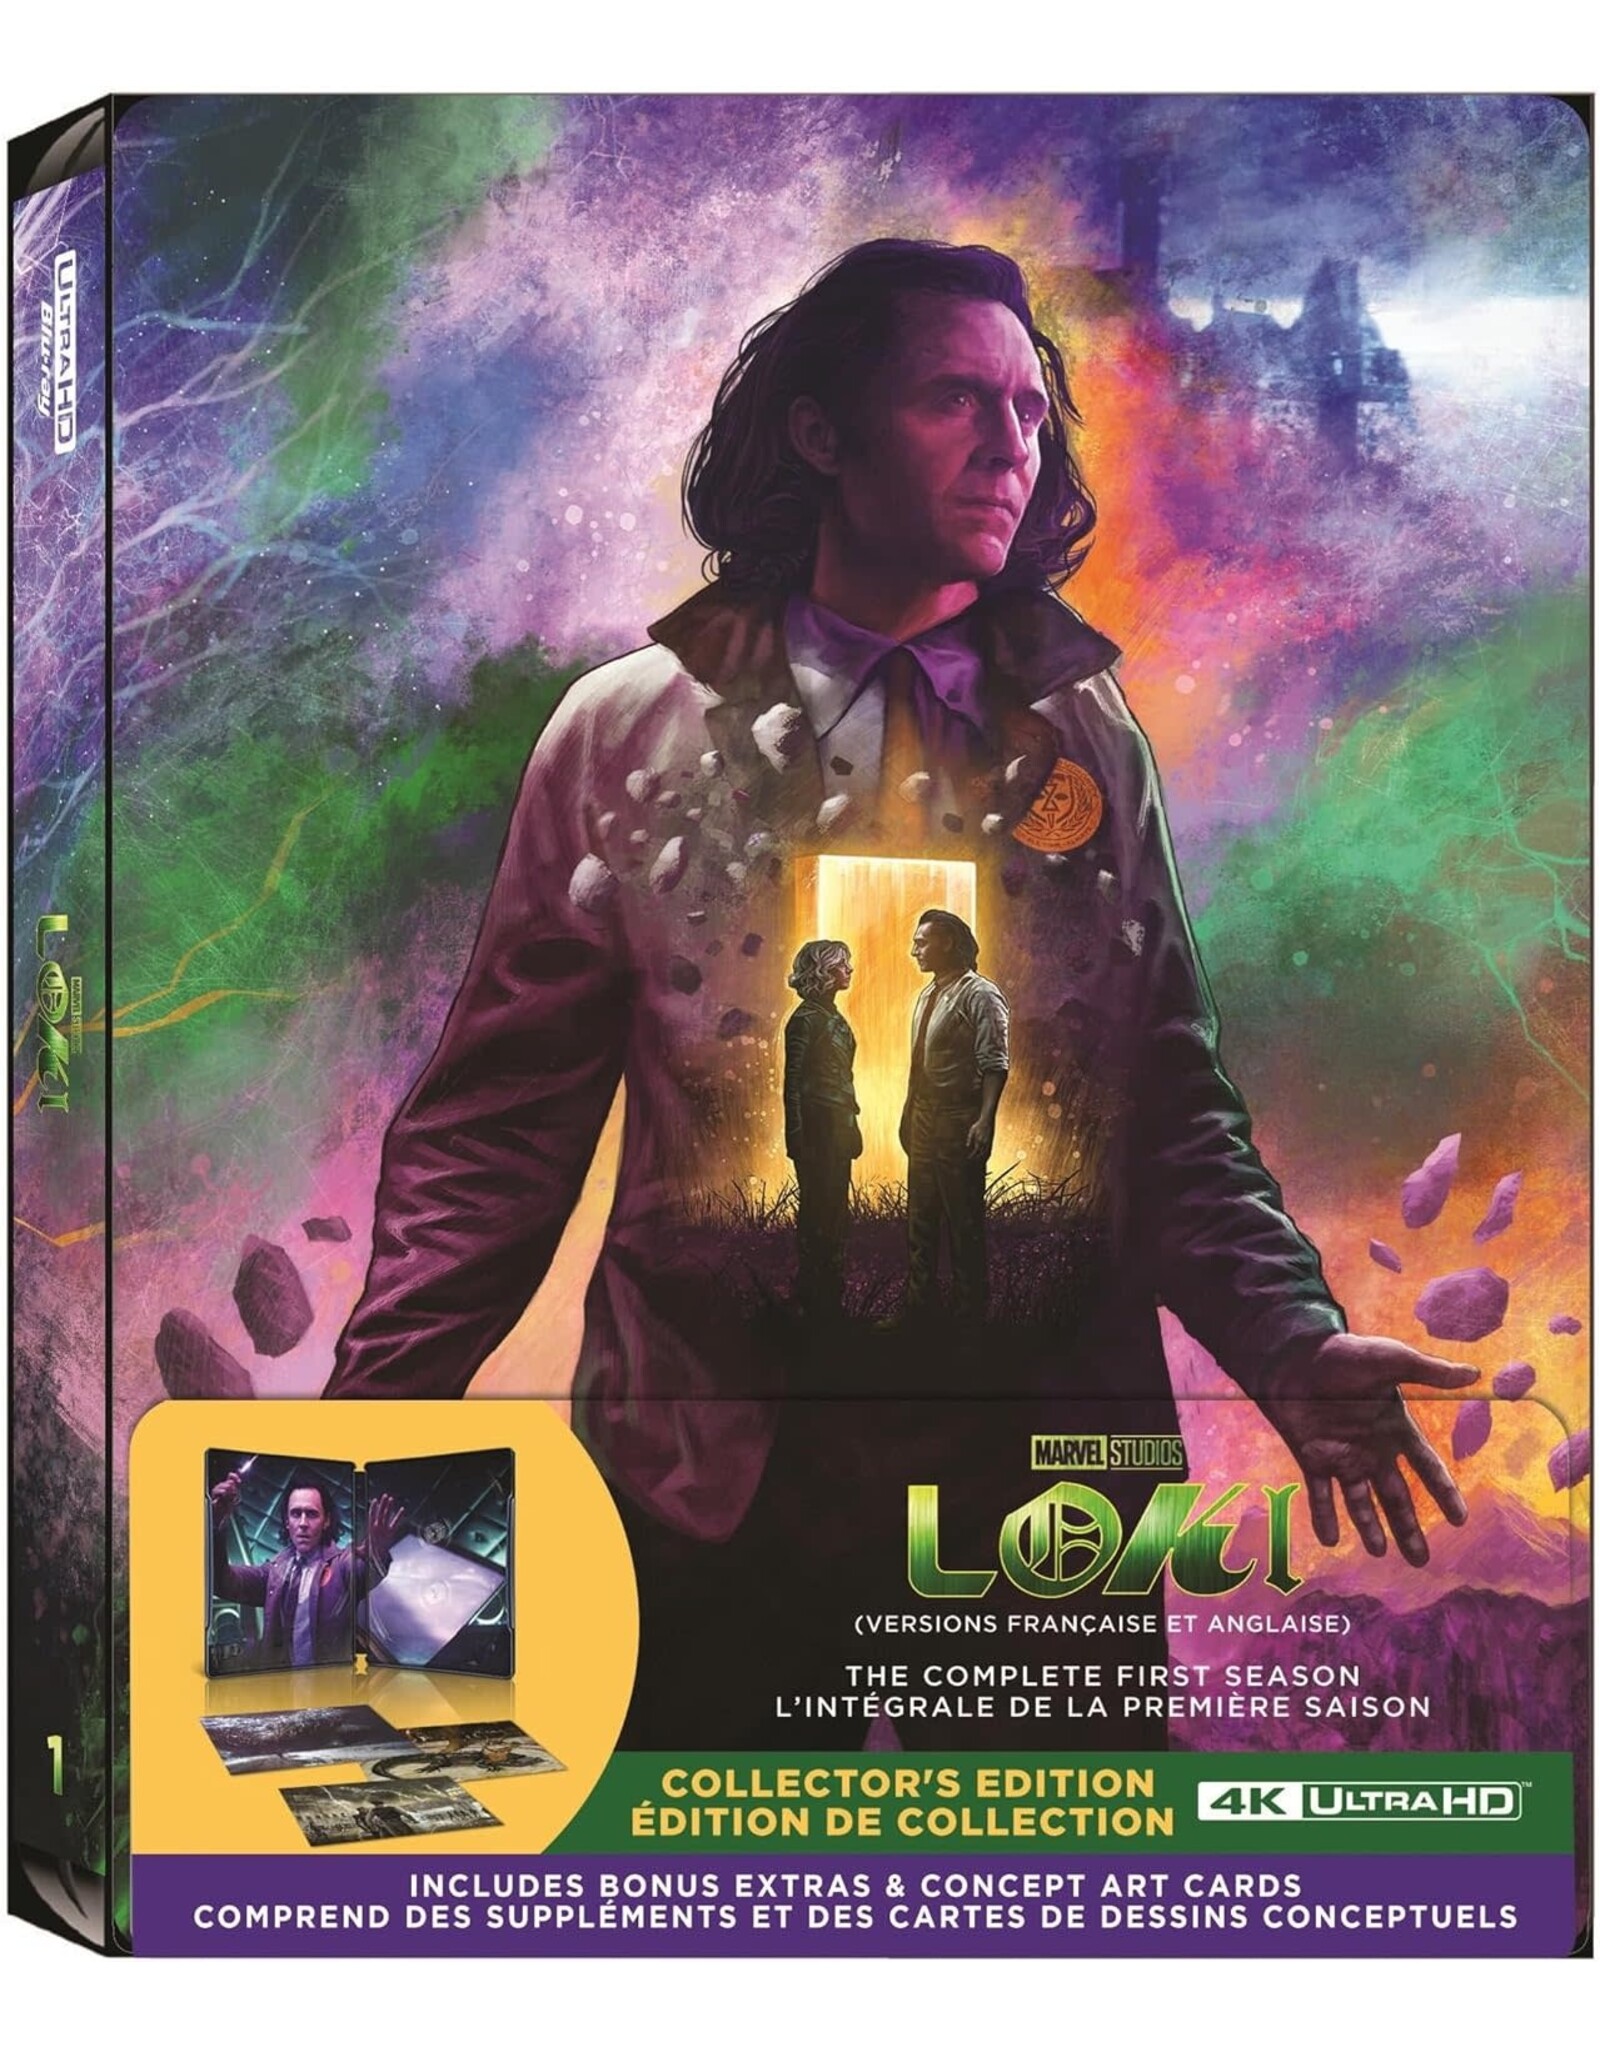 Loki: The Complete First Season 4K Blu-ray (SteelBook)